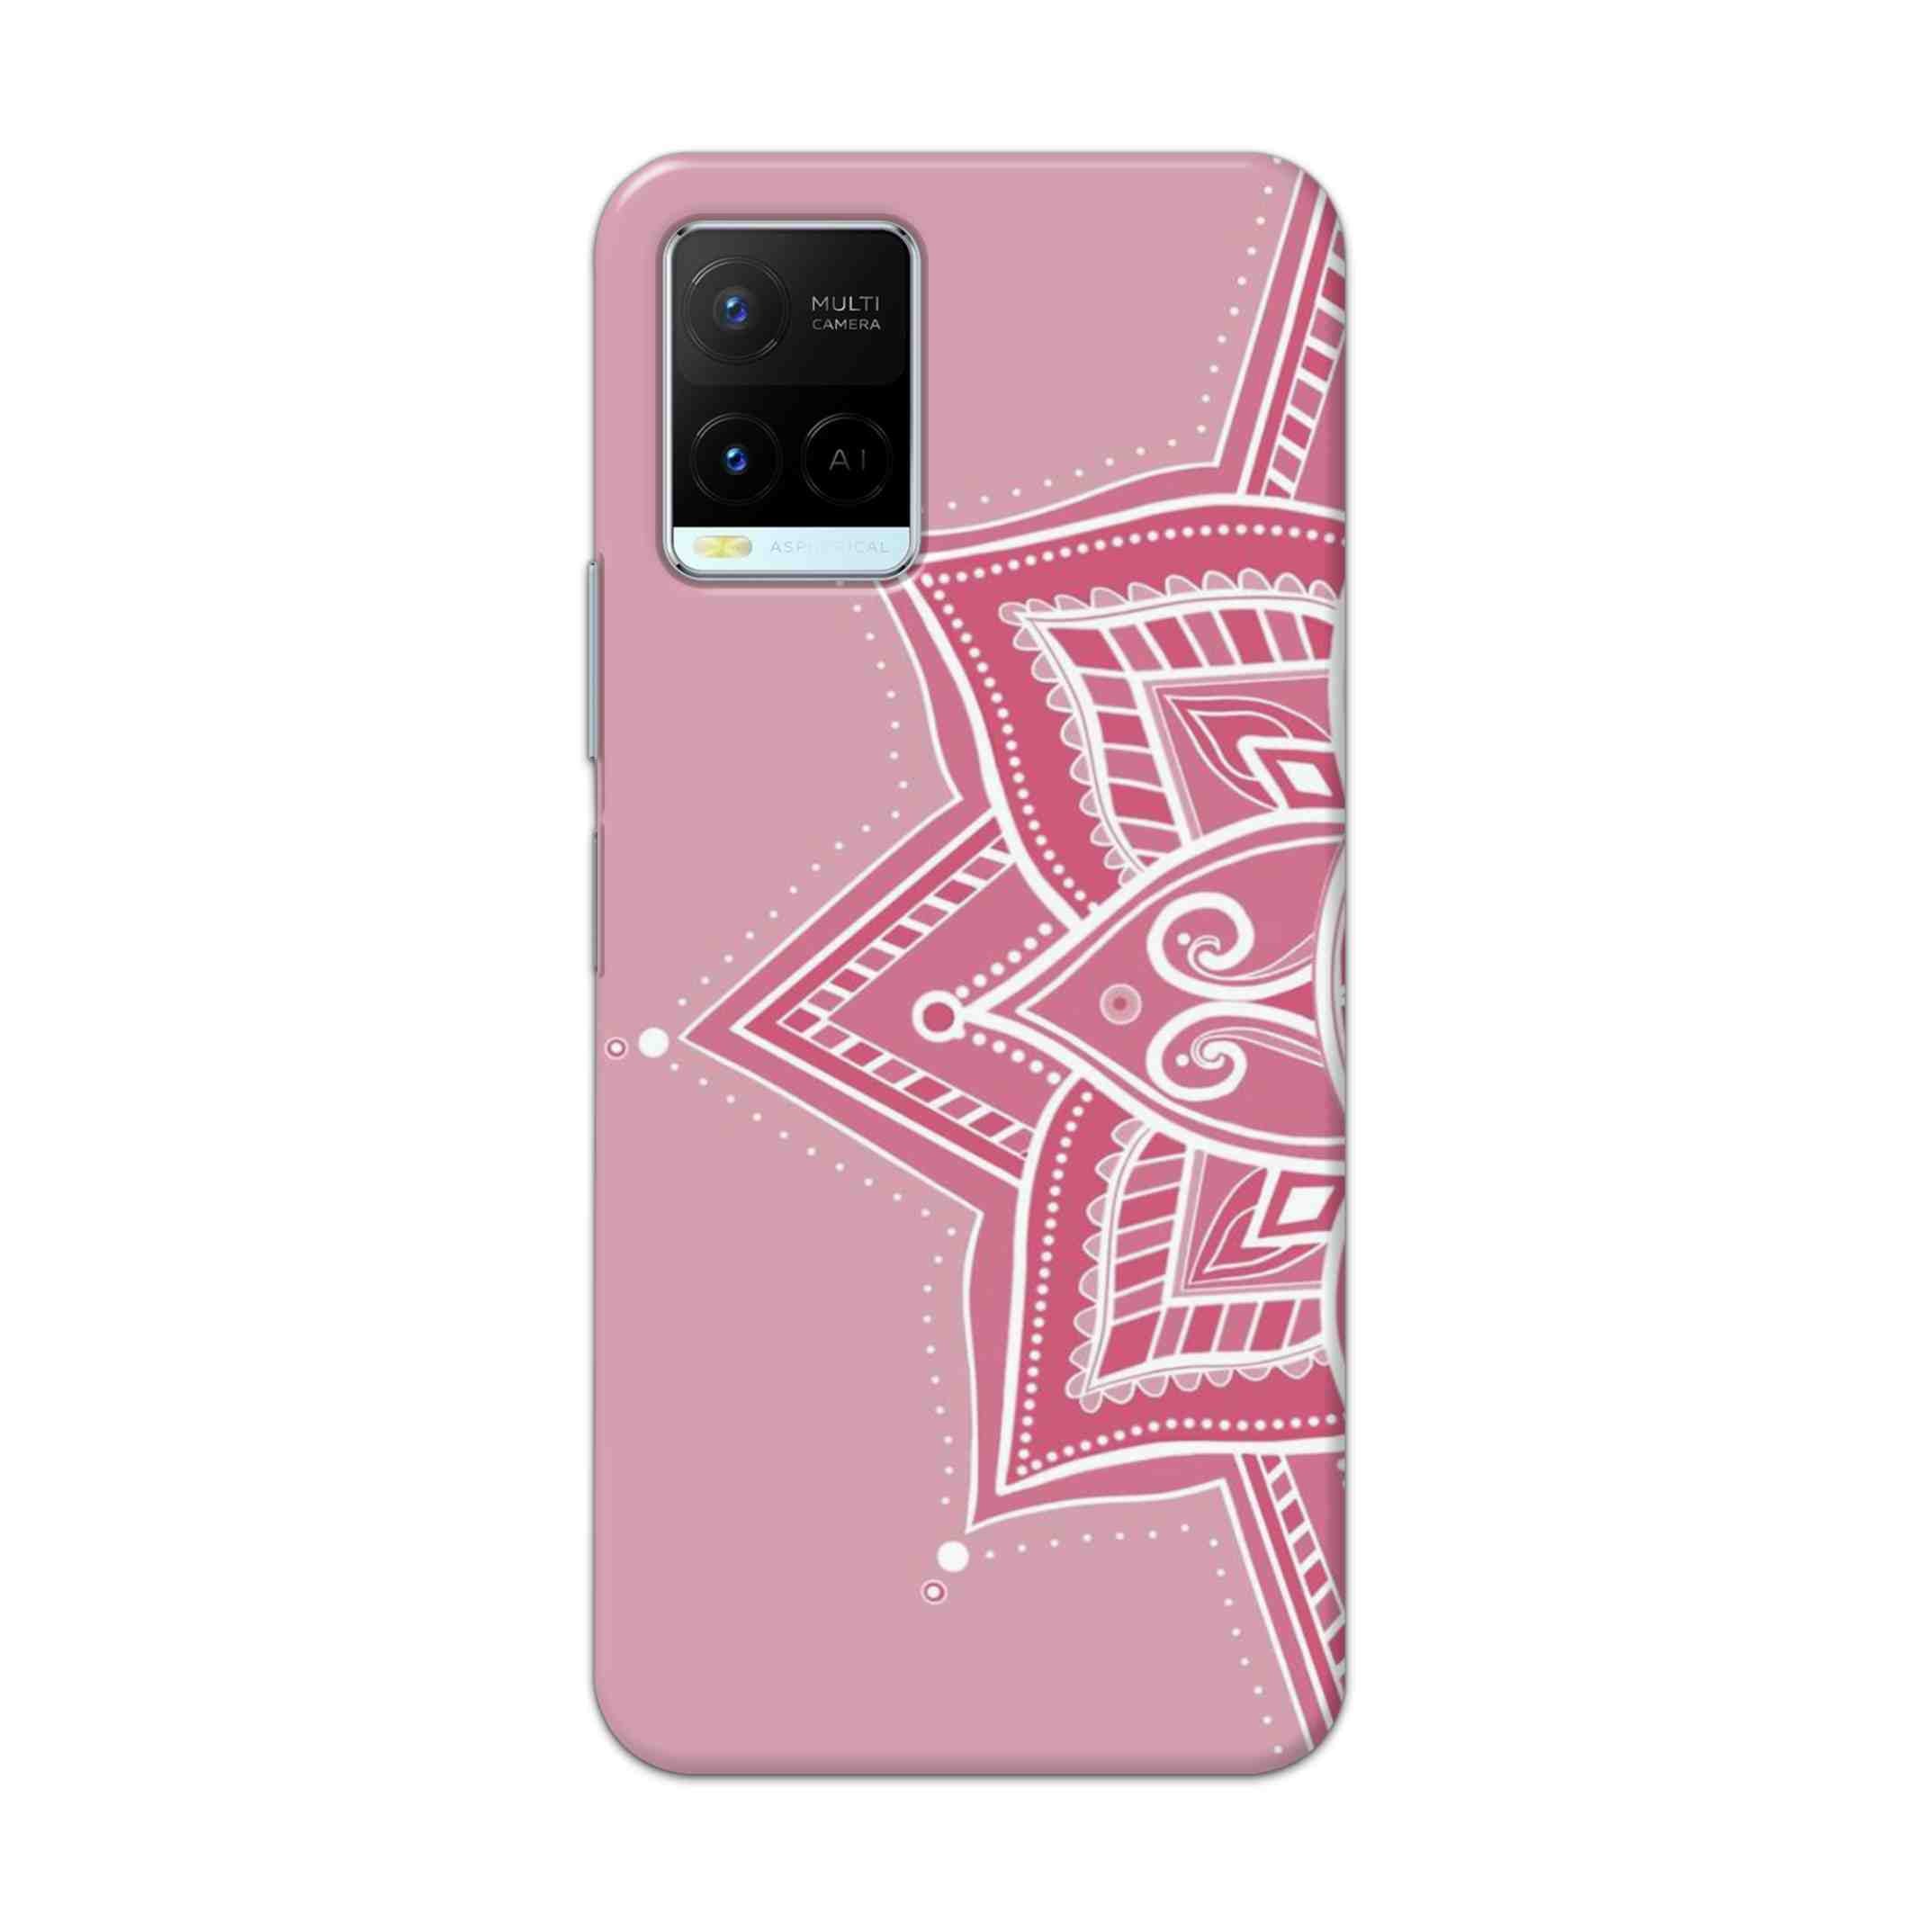 Buy Pink Rangoli Hard Back Mobile Phone Case Cover For Vivo Y21 2021 Online